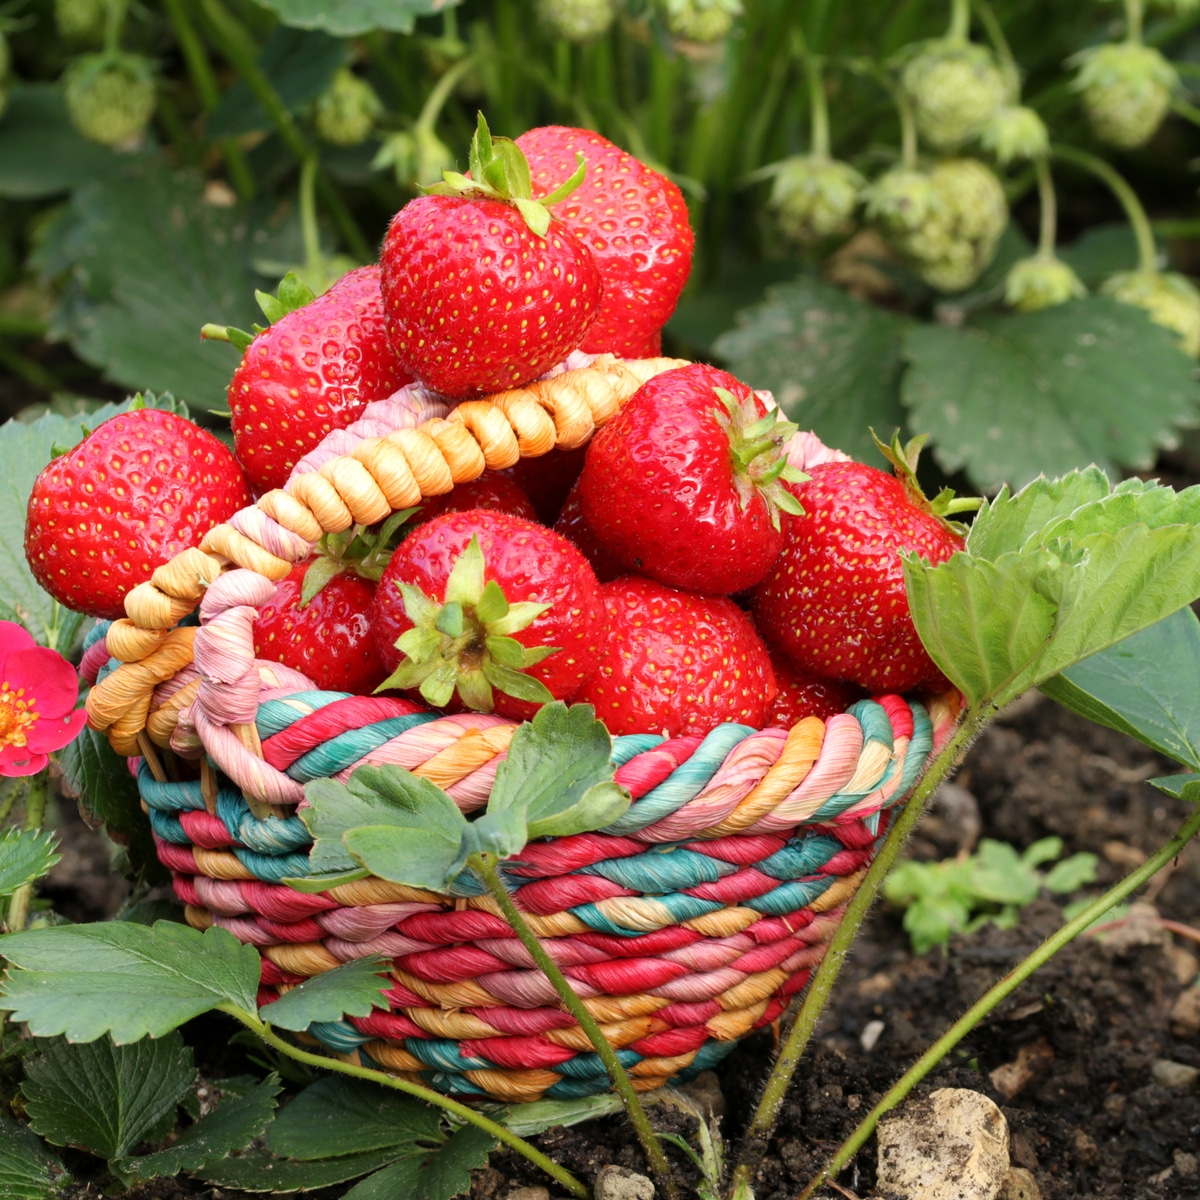 Small basket full of huge ripe freshly picked strawberries